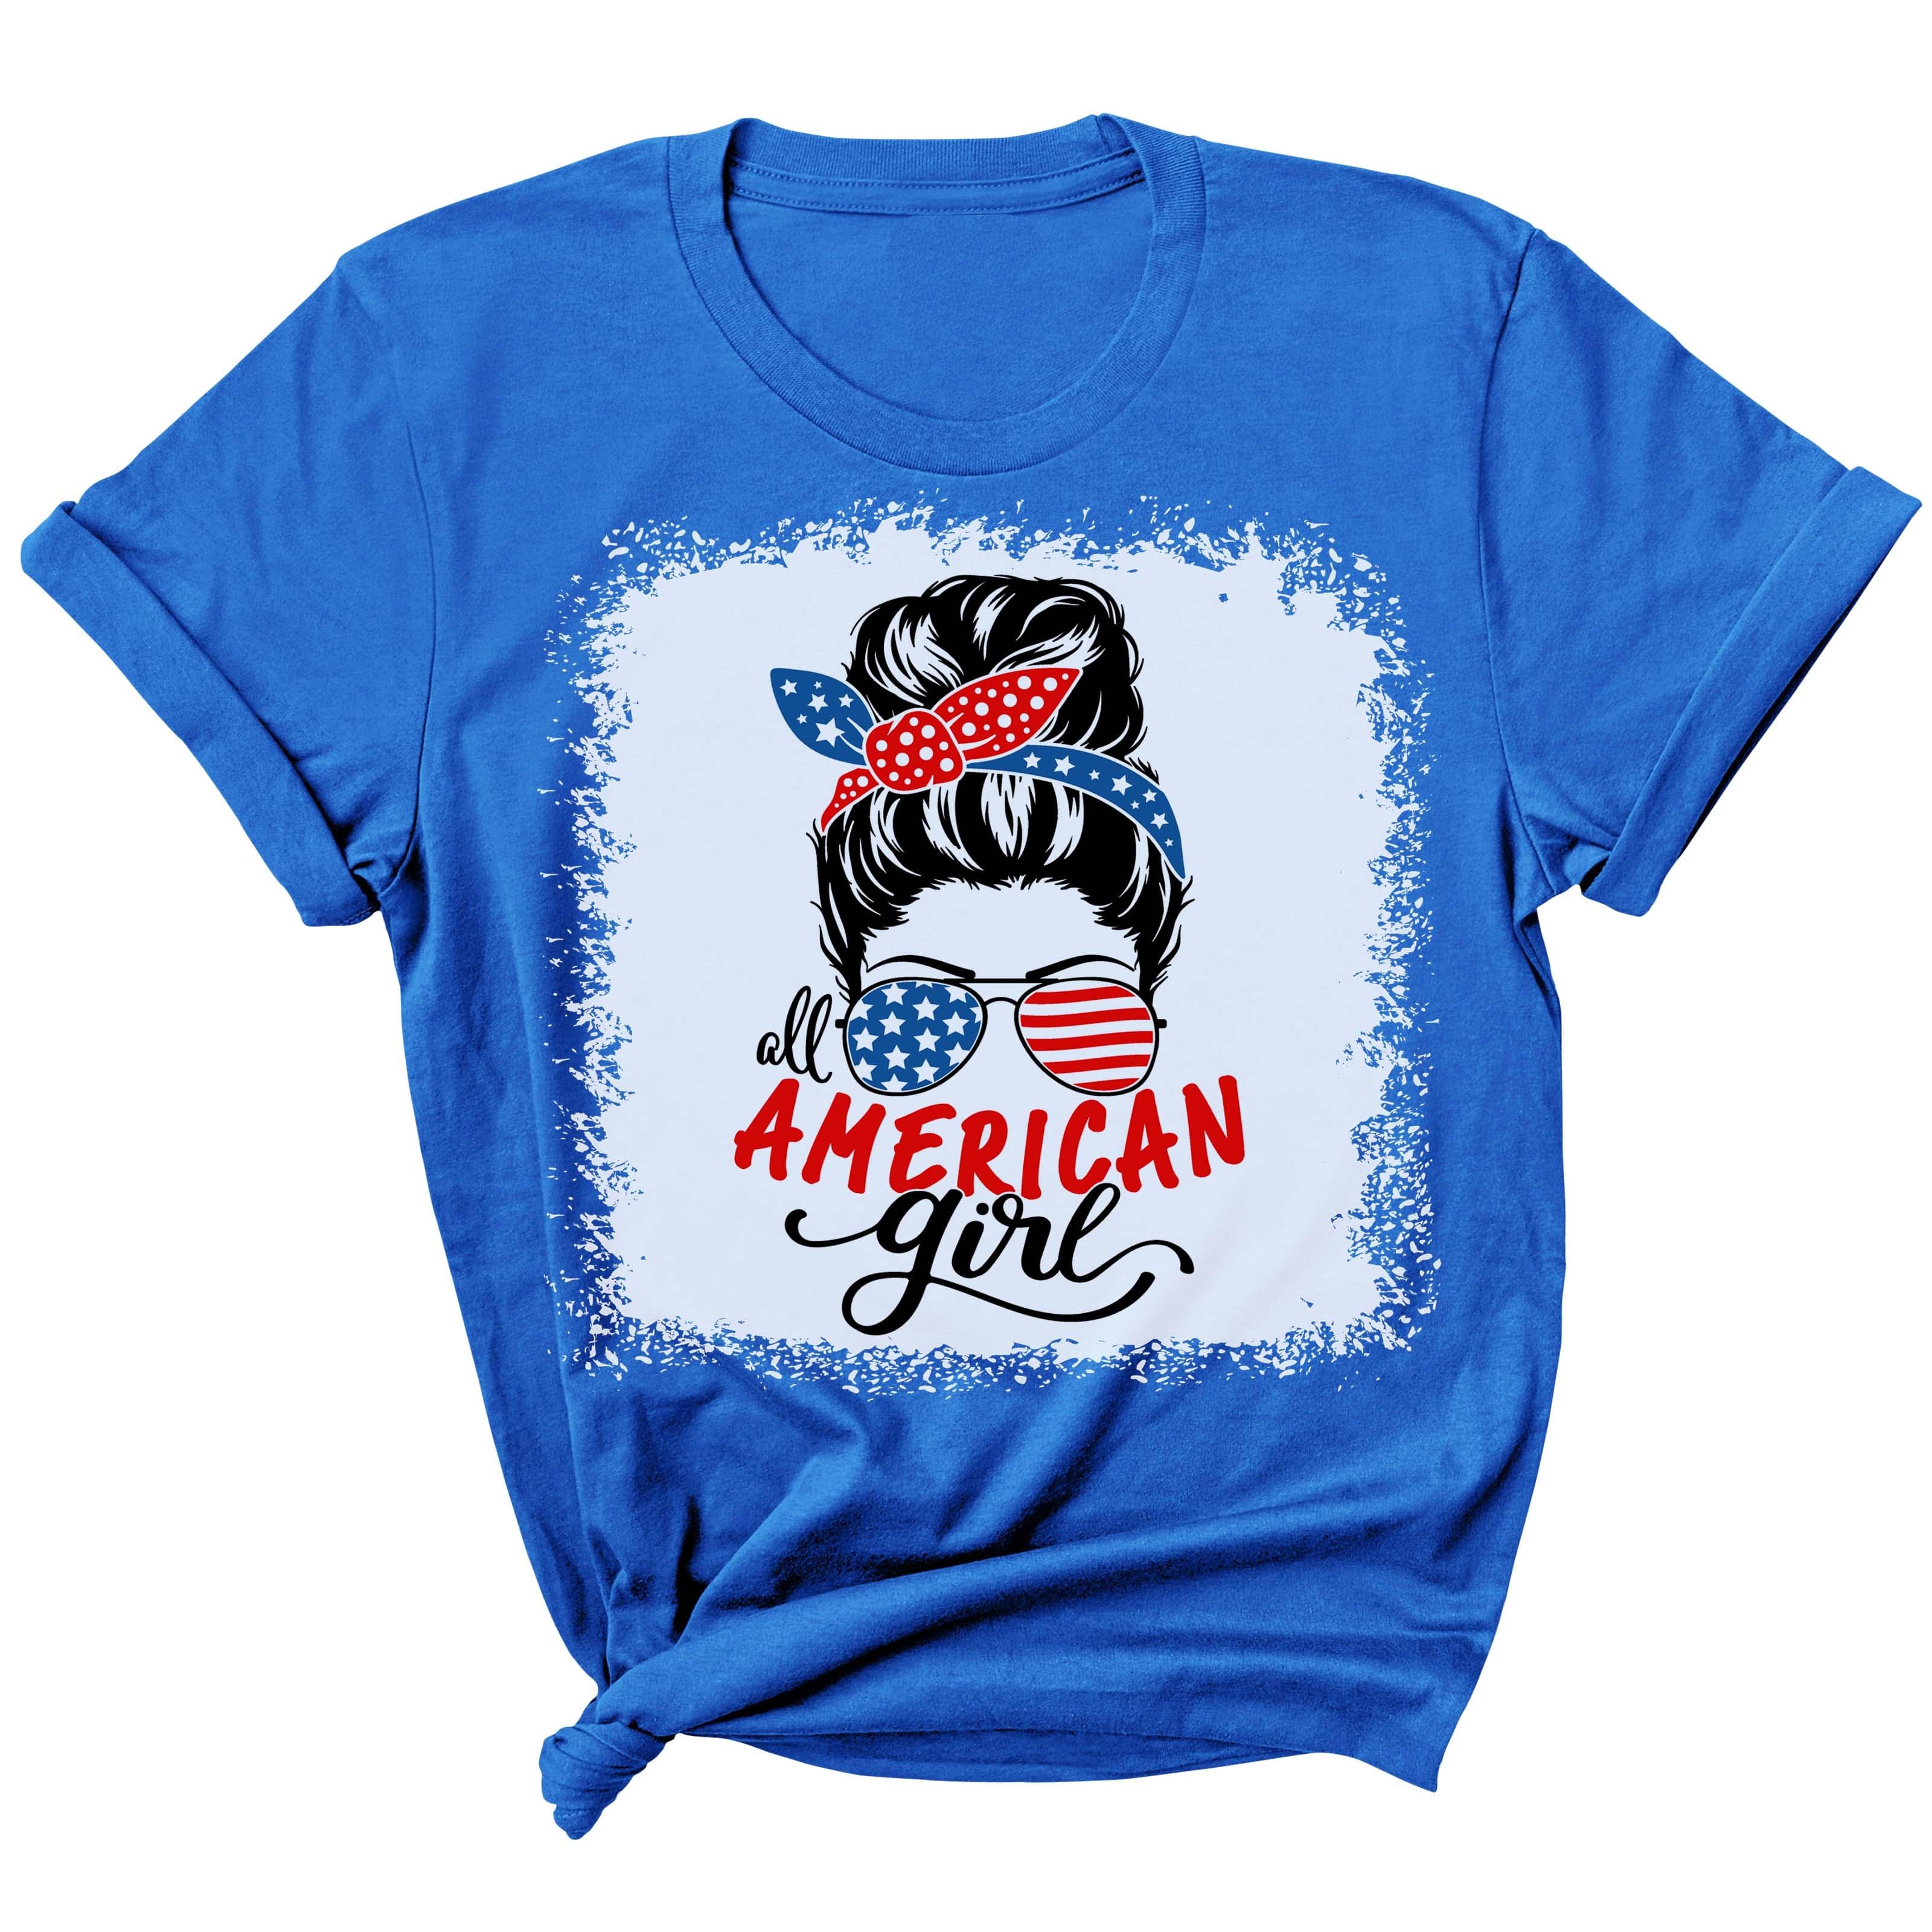 All American Girl Women's Graphic Print T-Shirt